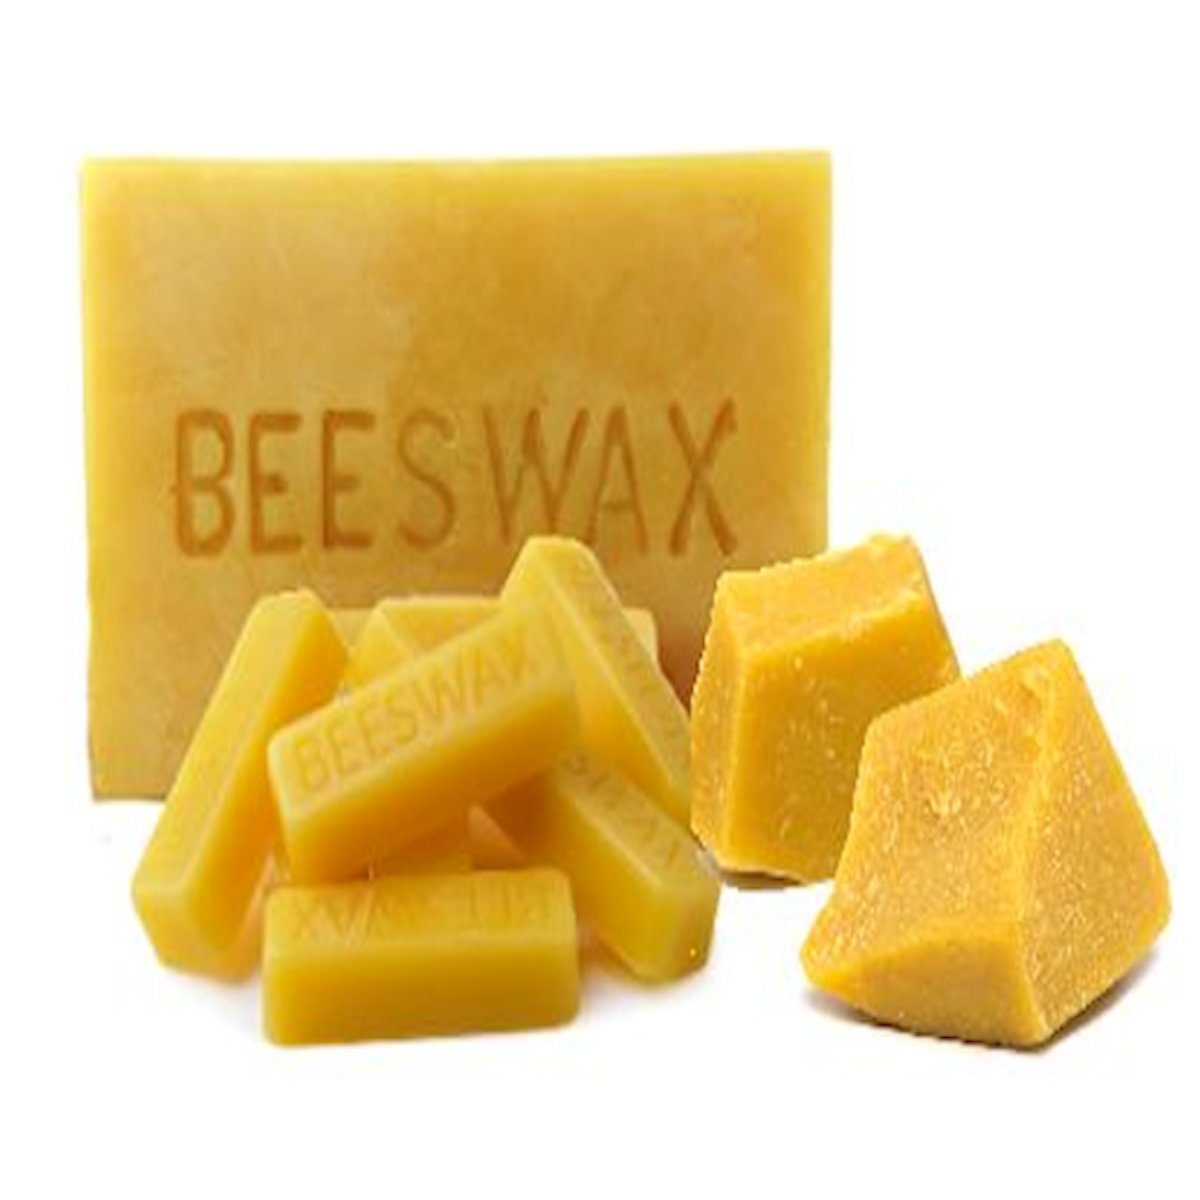 Beeswax and Bulk Beeswax - pure 100% beeswax